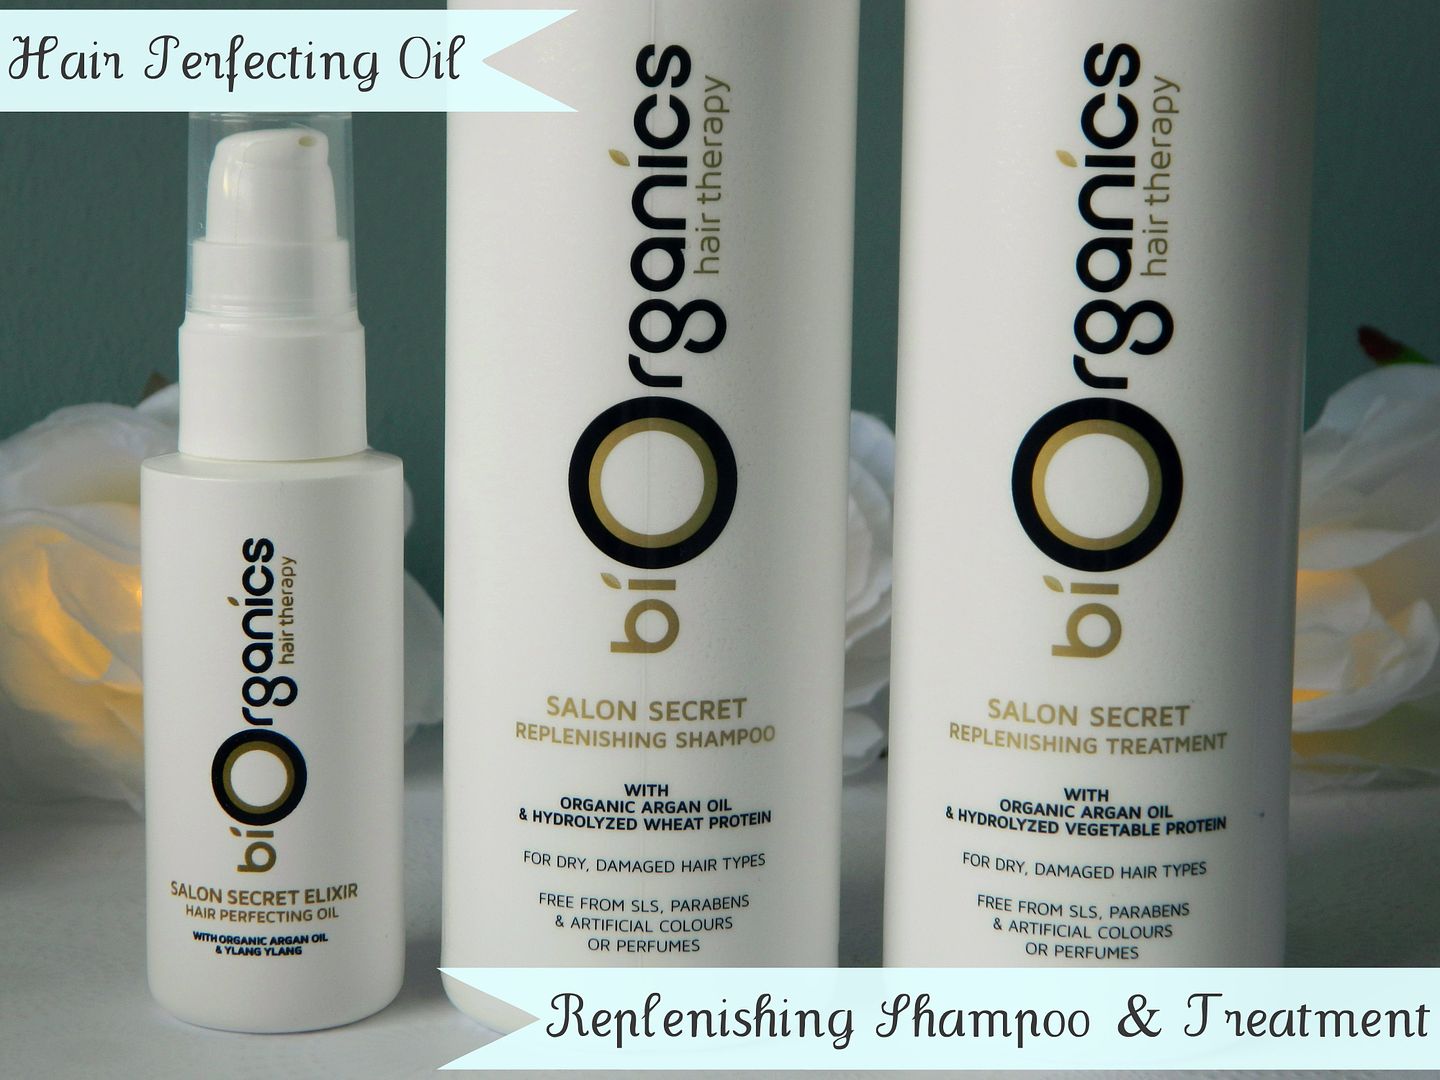 BiOrganics Hair Therapy Salon Secret Range Replenishing Shampoo Treatment Elixir Hair Perfecting Oil Close Up Review Belle-amie